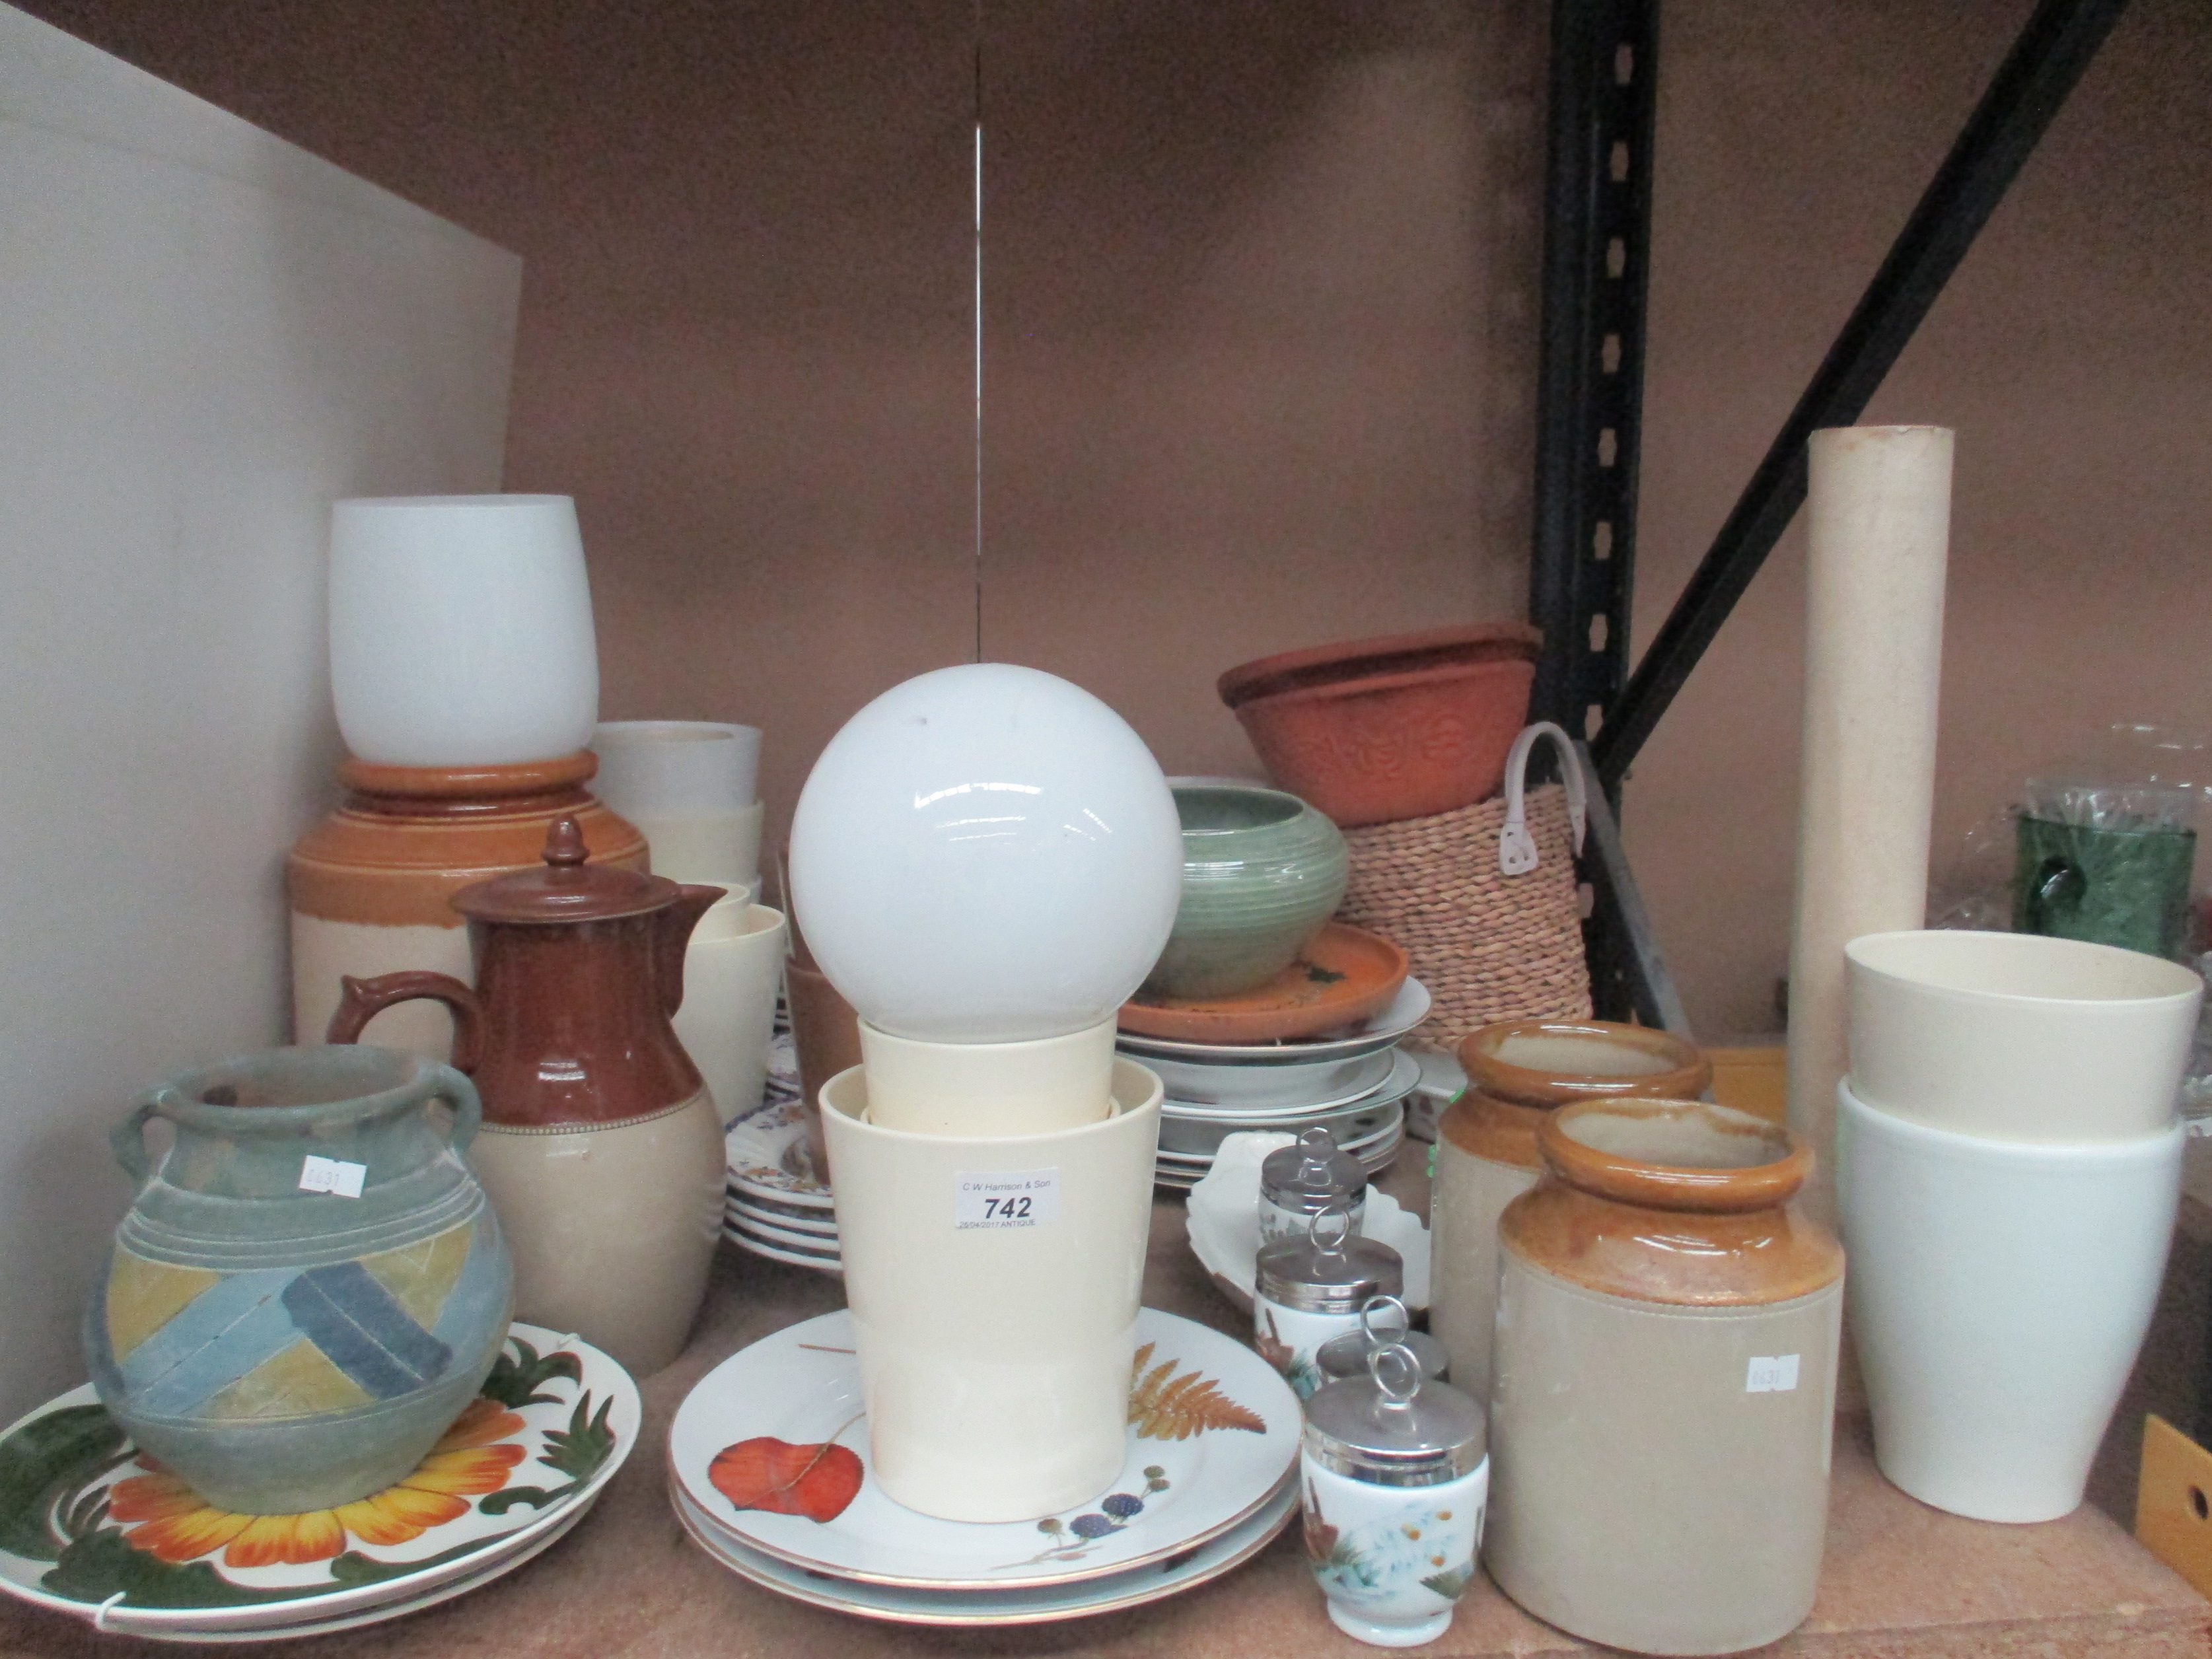 Stoneware jars and ceramic tableware (a lot)